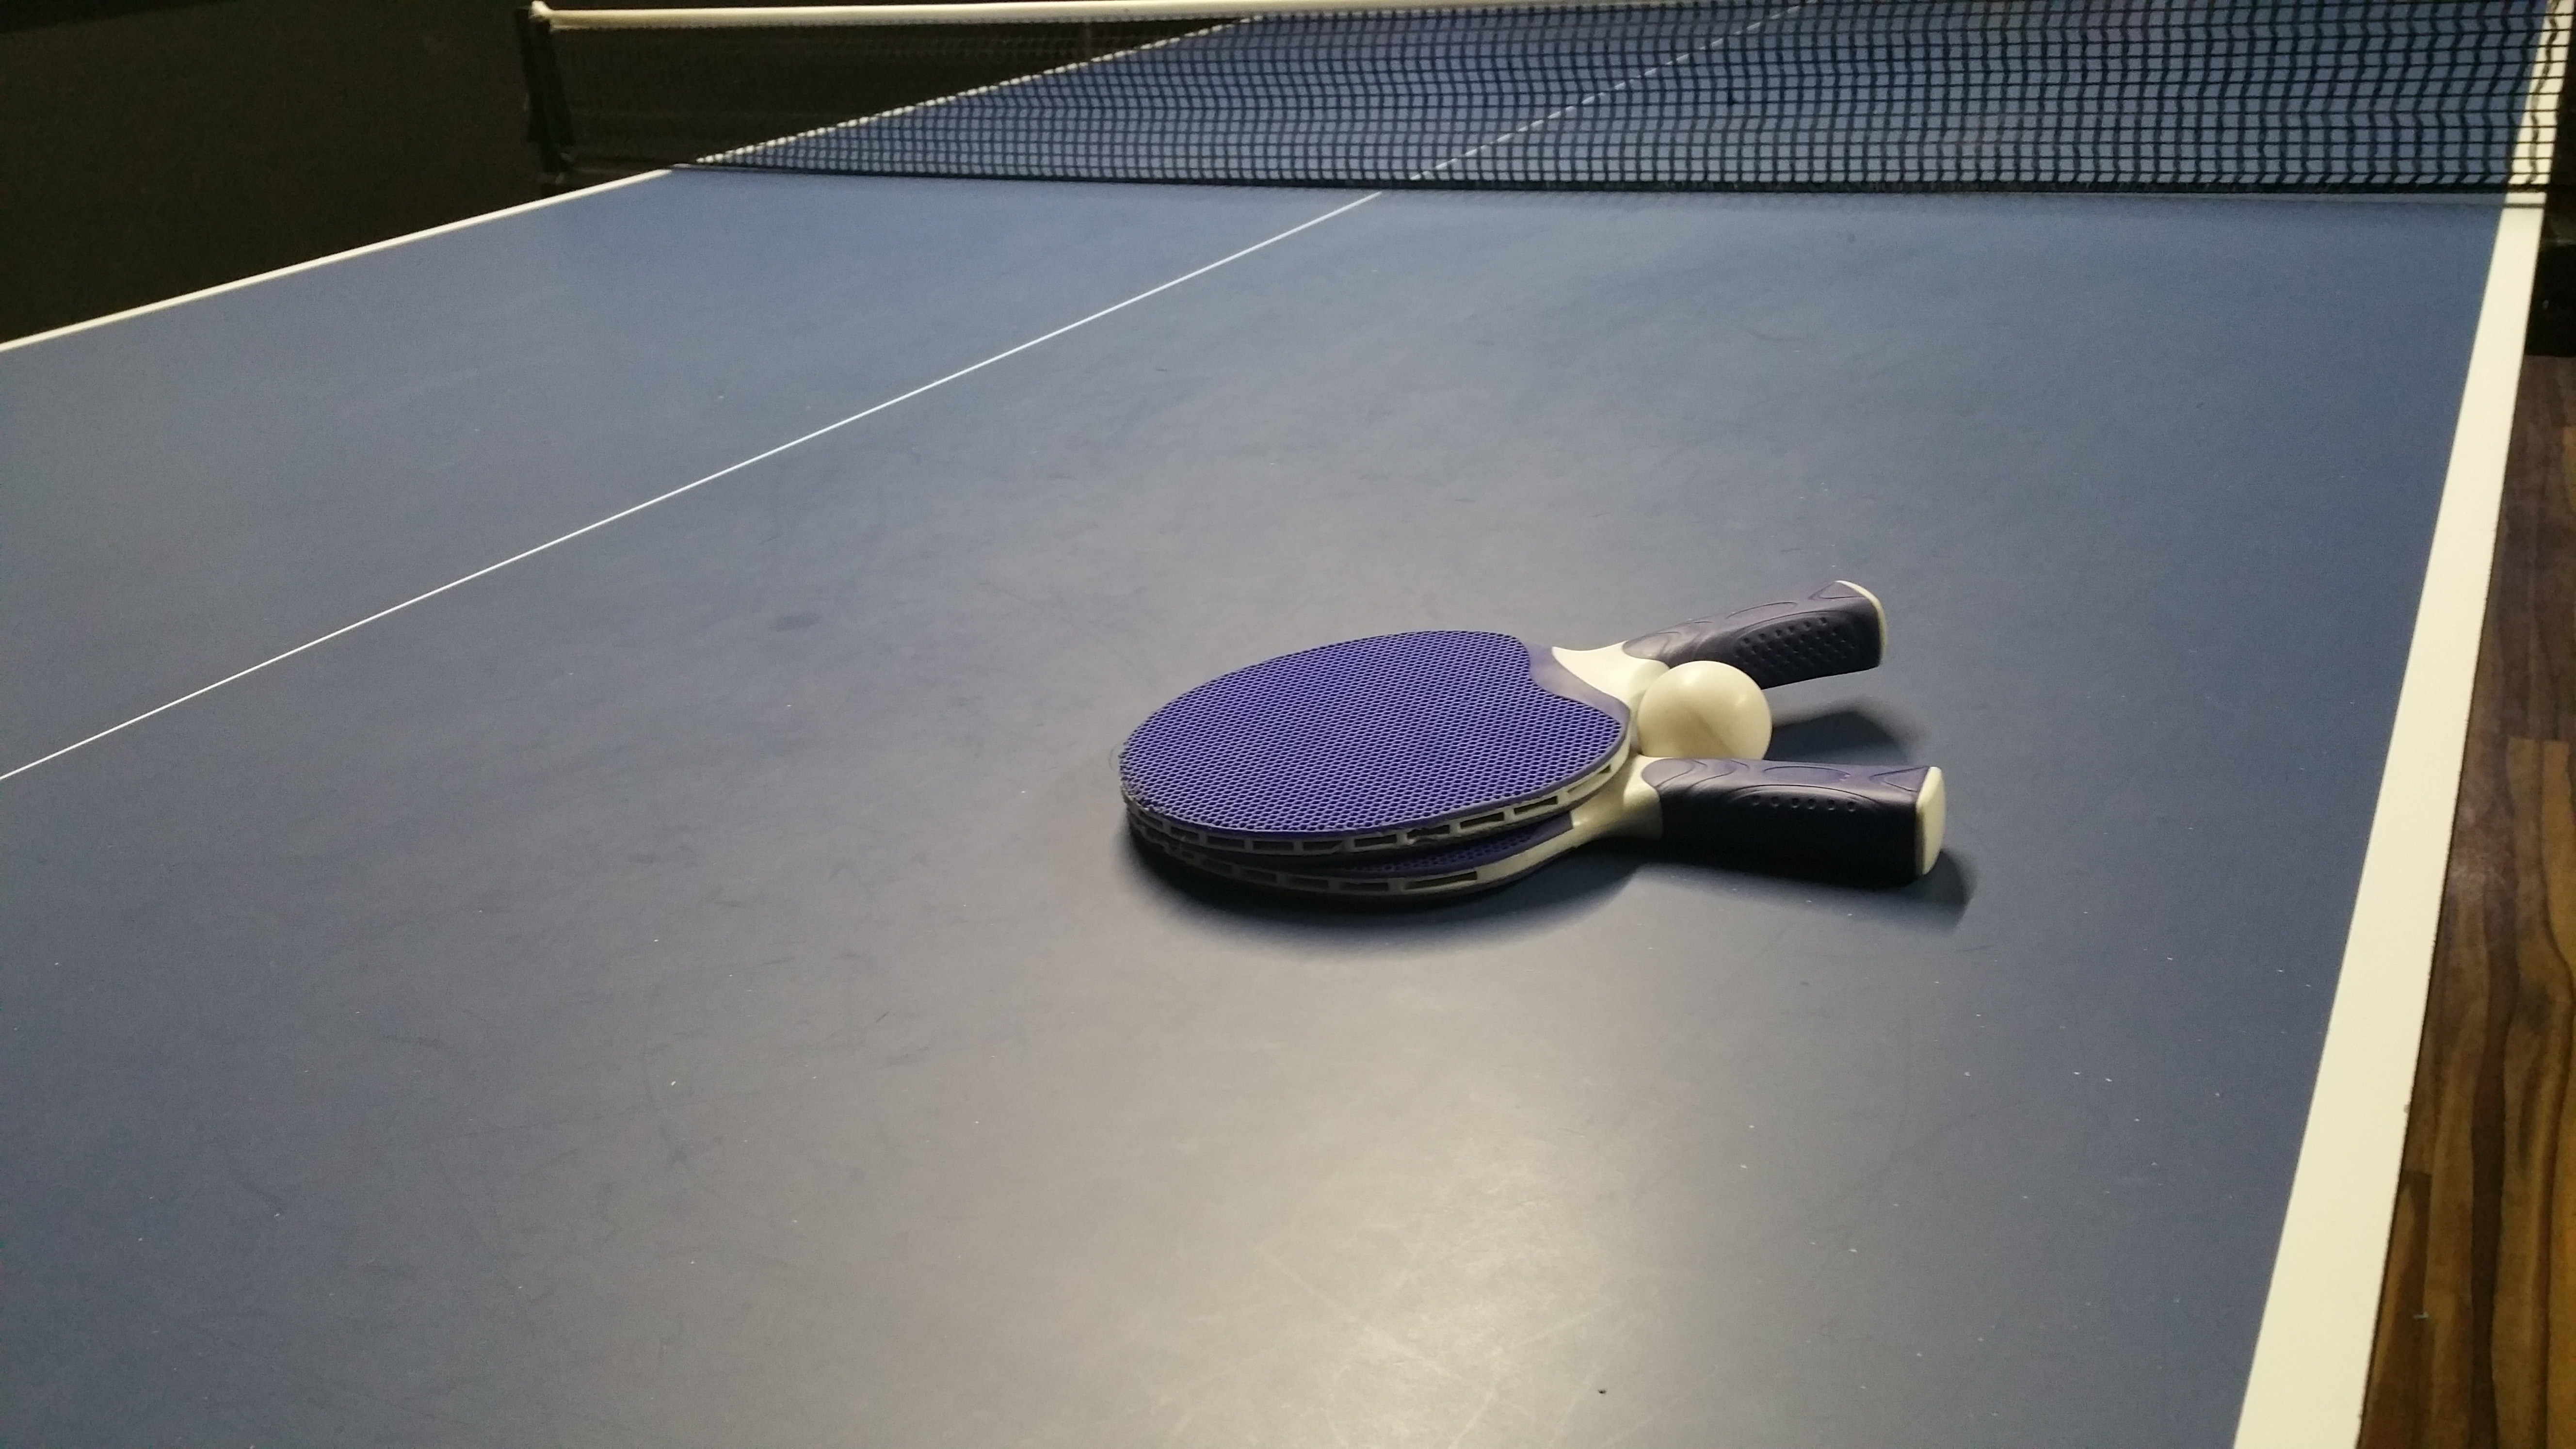 Game, Tennis, Pong, Play, Ping, Ball, sport, net - sports equipment